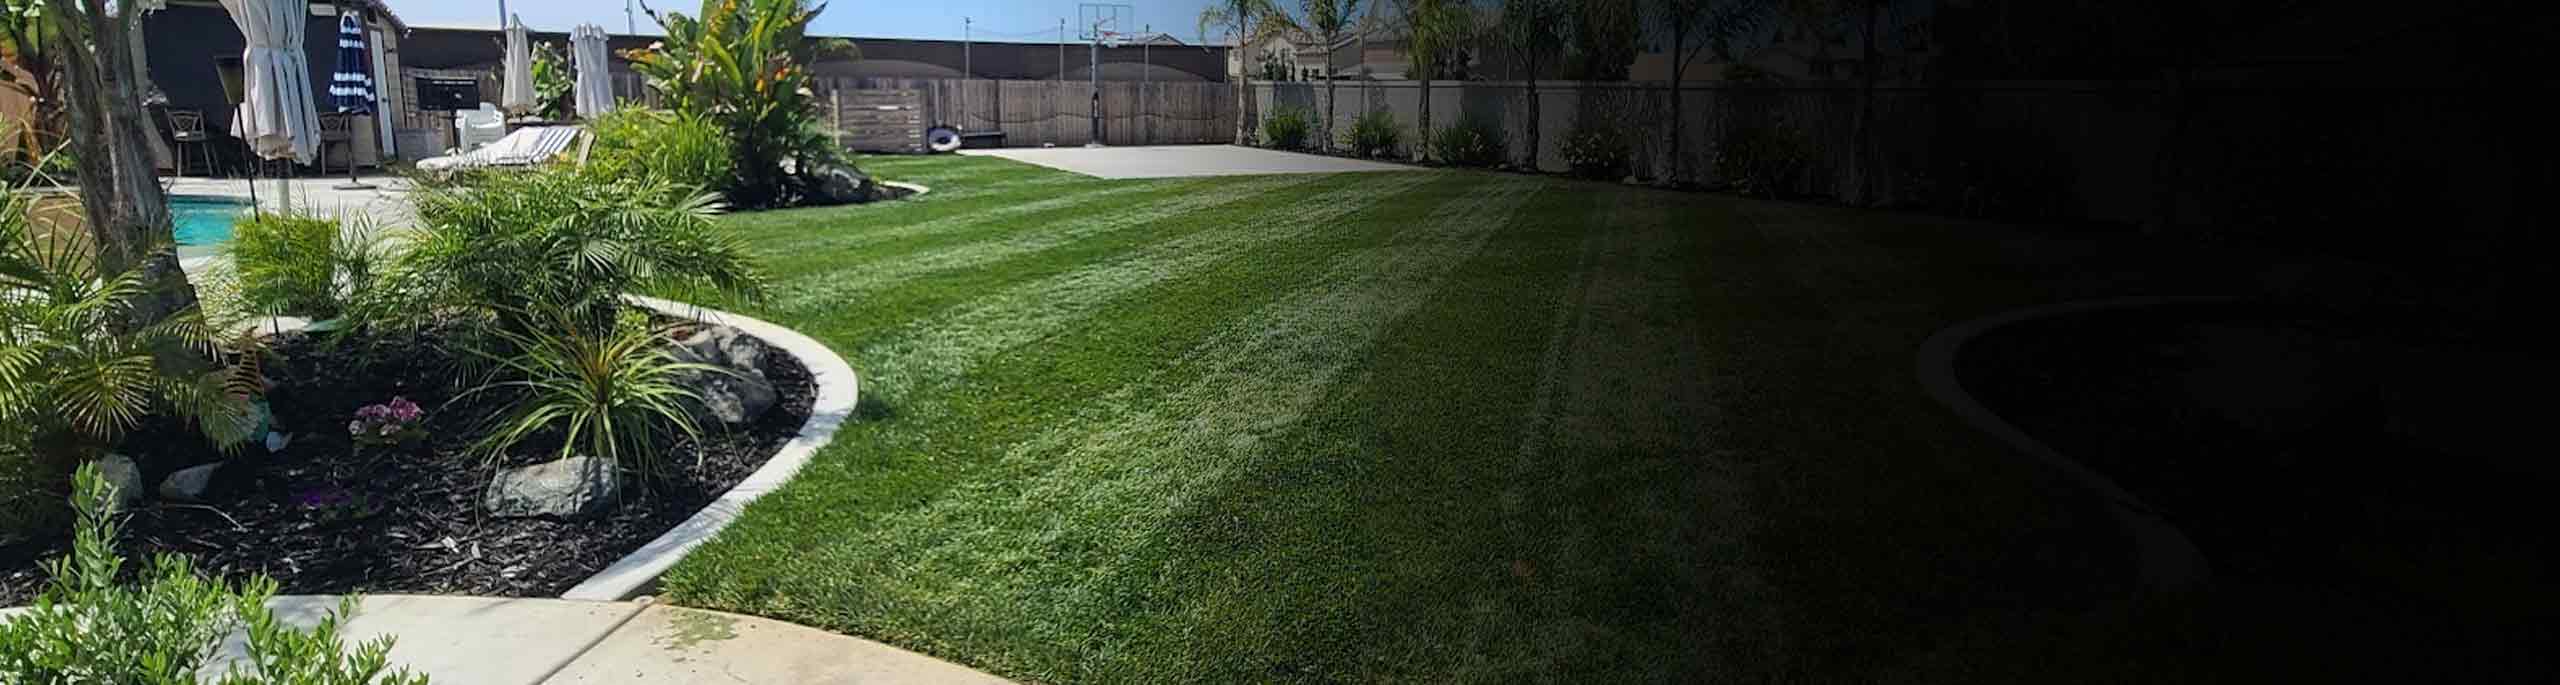 A scenic backyard with concrete sidewalk, concrete landscape border and concrete basketball court alongside green grass.